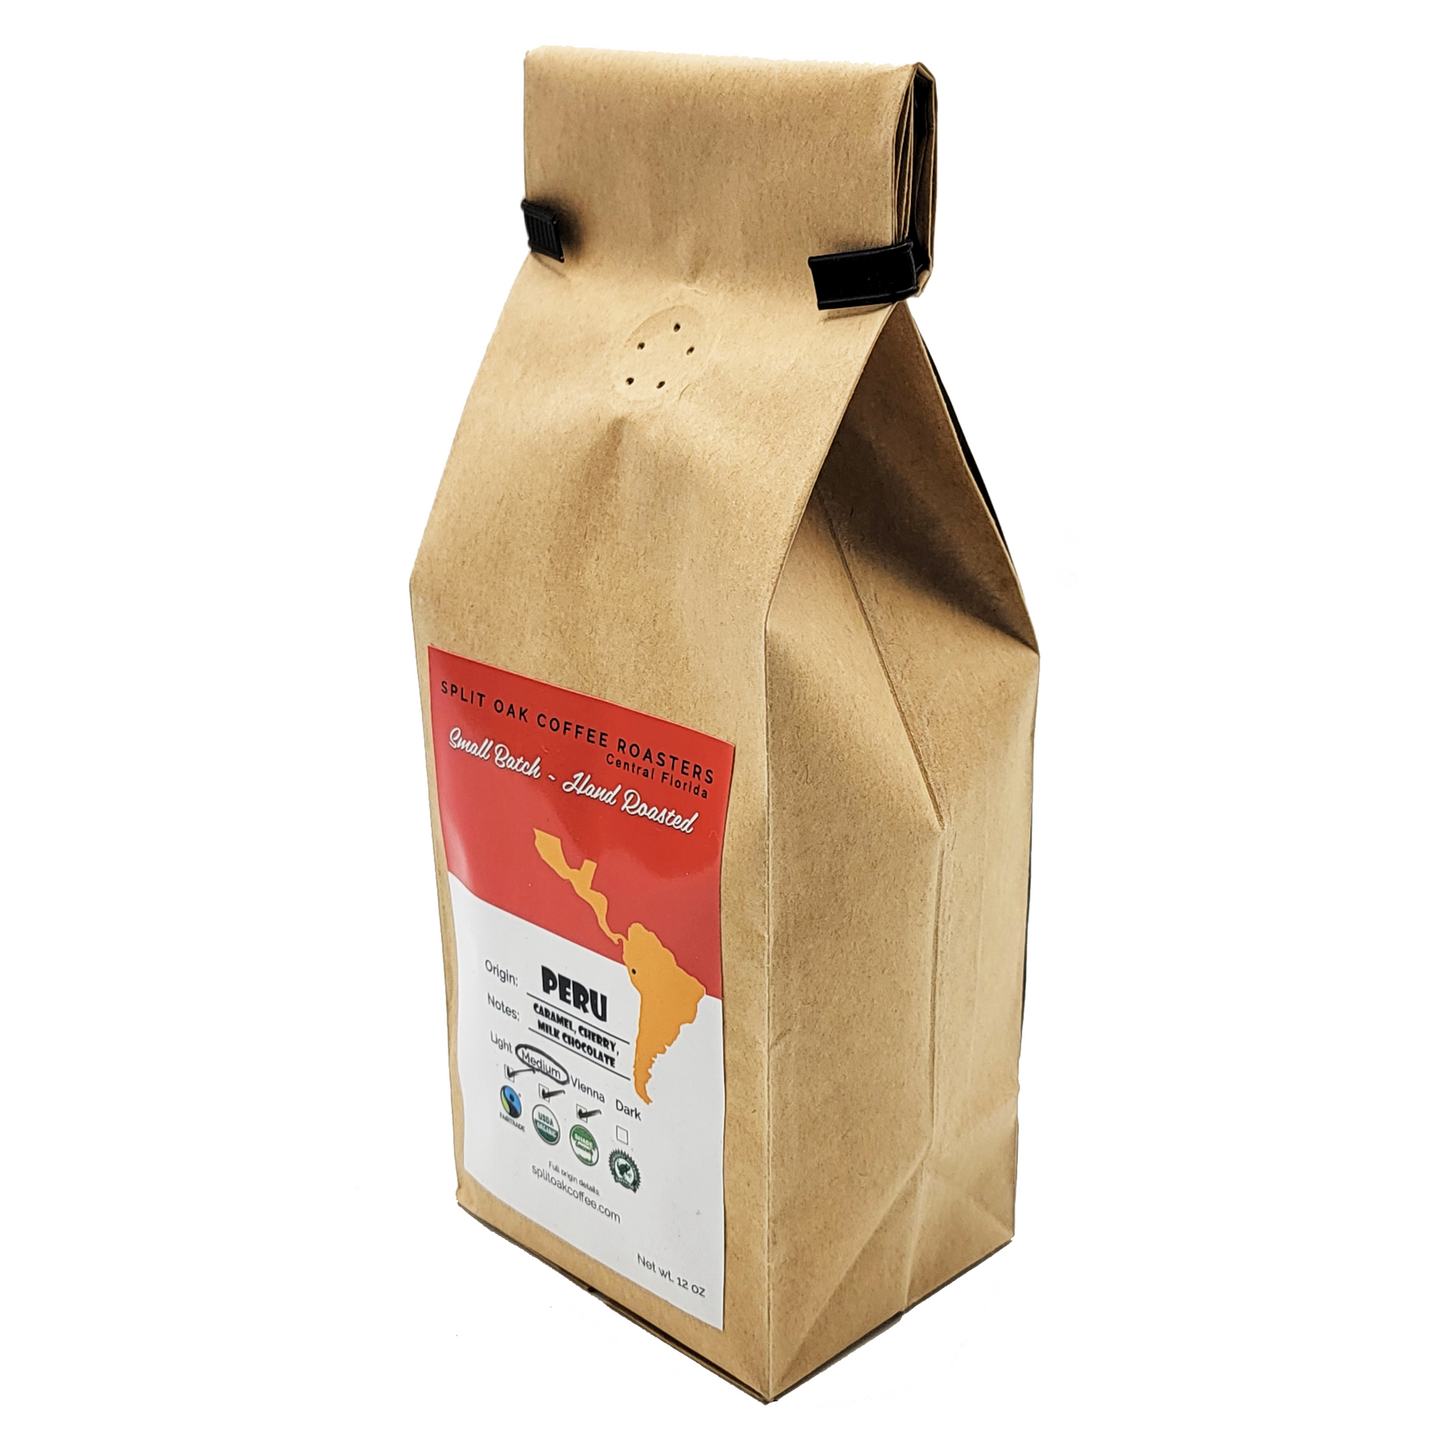 Organic Peru Whole Bean Coffee 12oz, Medium Roast